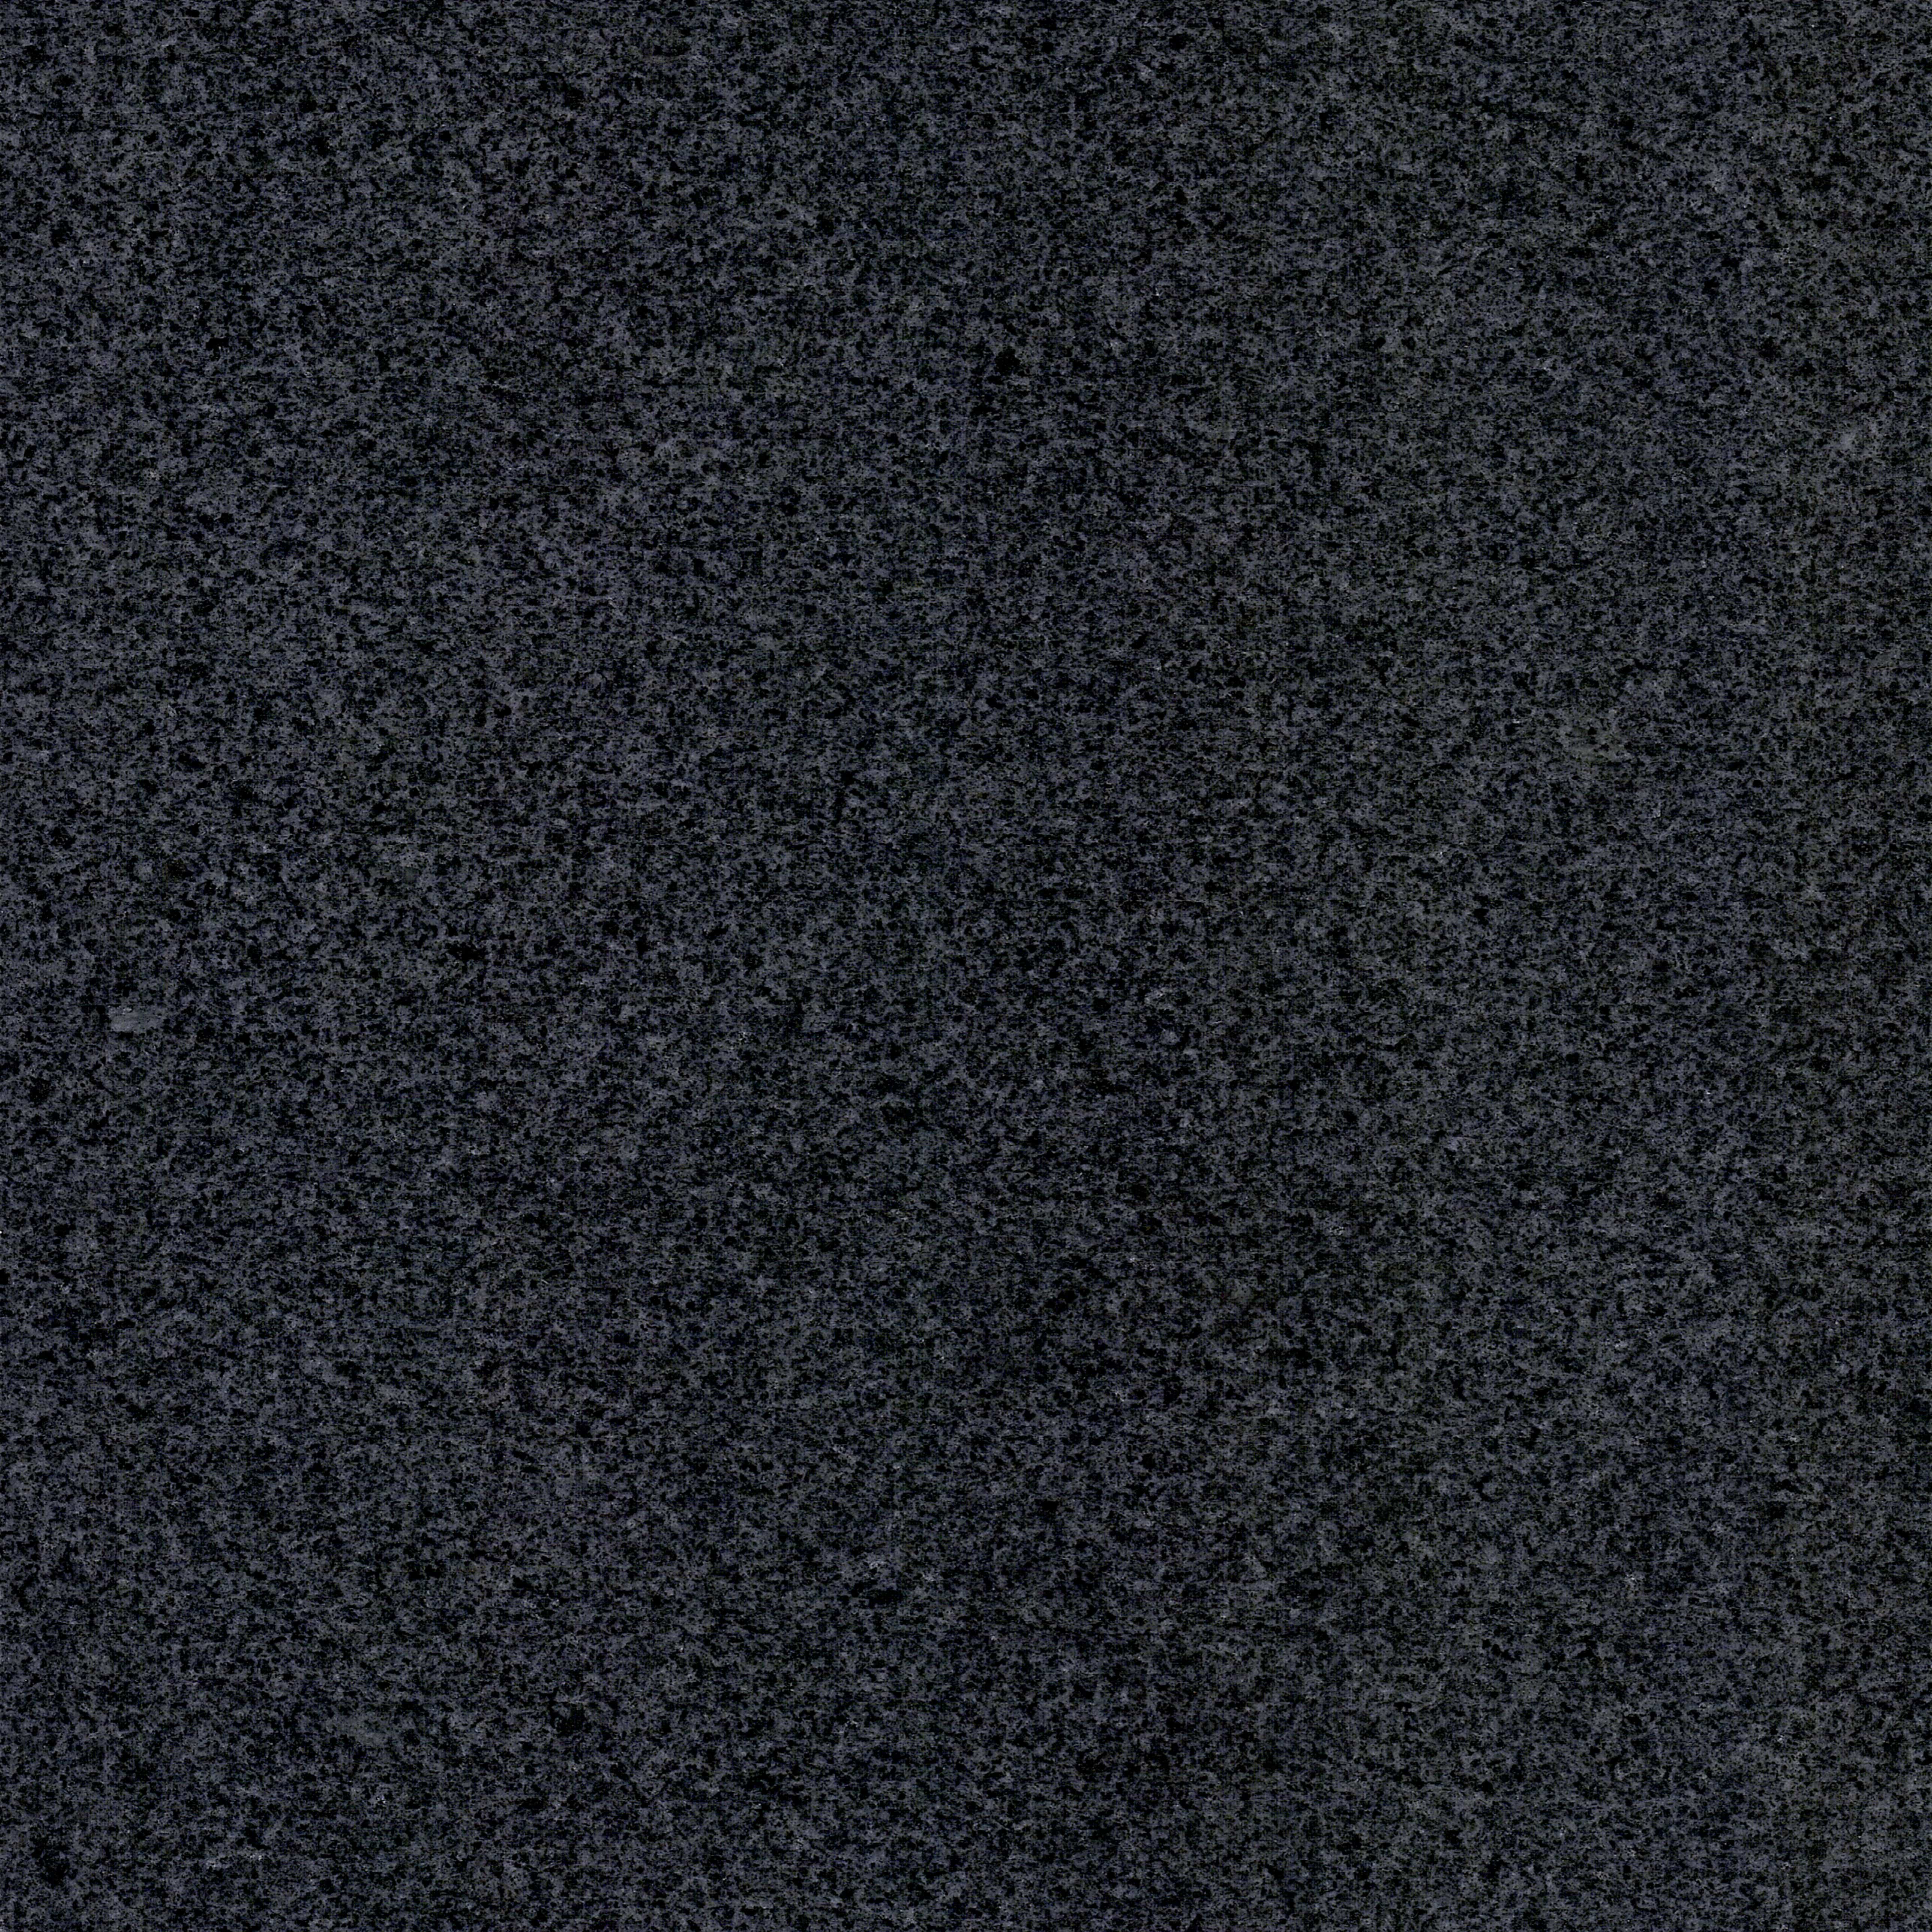 G654 Imperial Black Granite